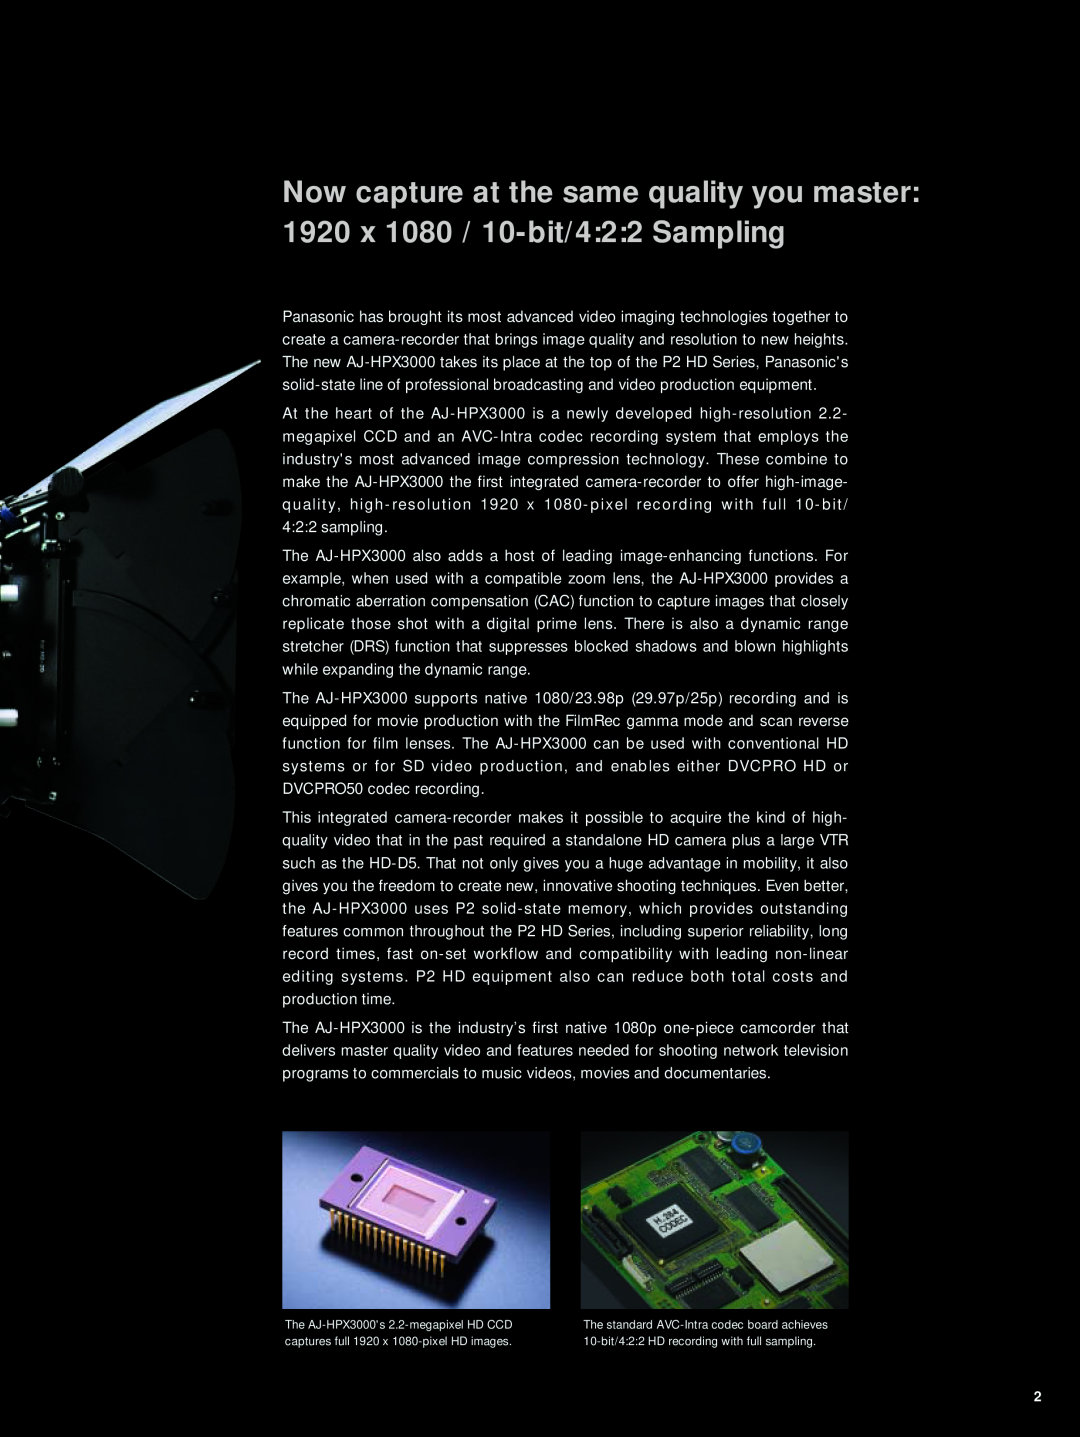 Panasonic manual The AJ-HPX3000s 2.2-megapixel HD CCD, captures full 1920 x 1080-pixel HD images 